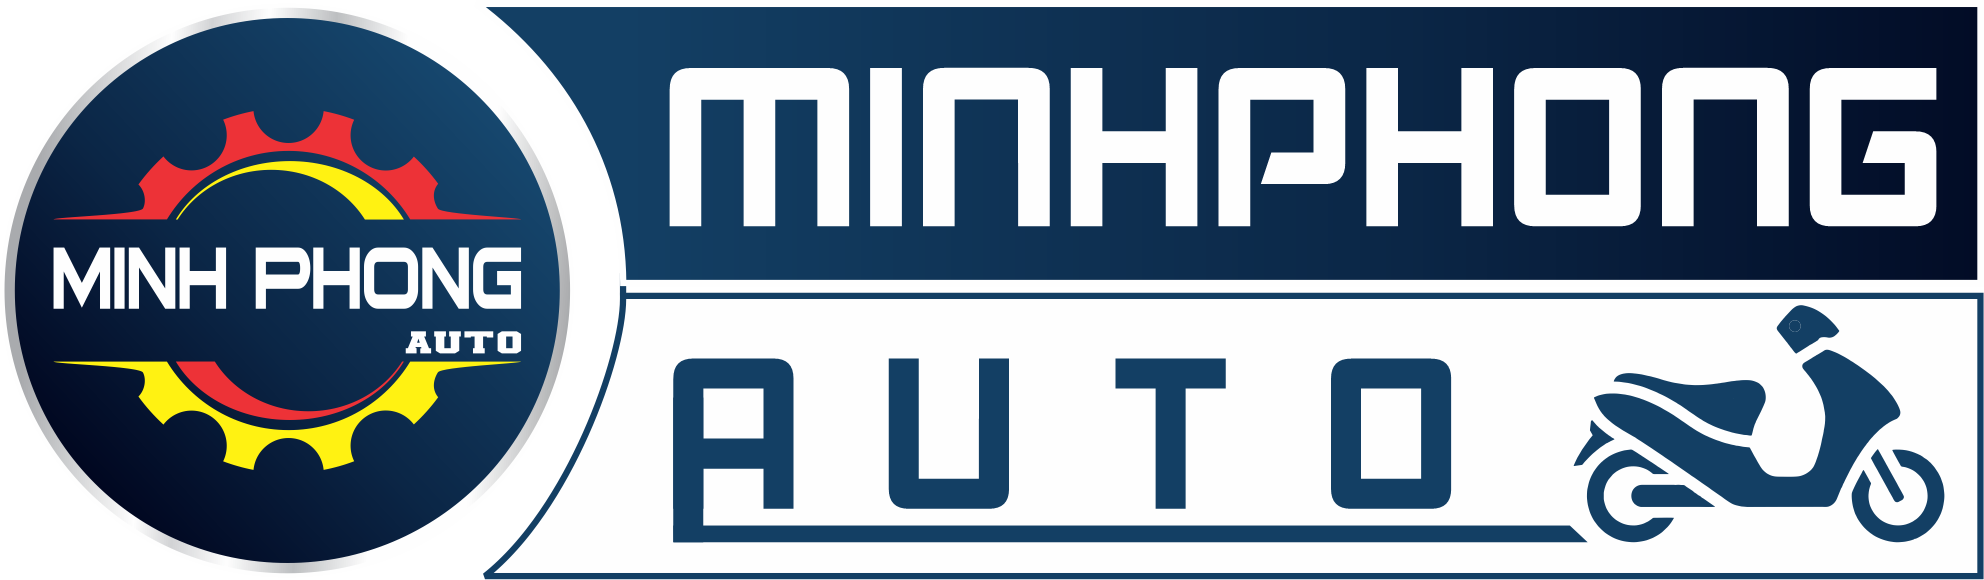 Minh Phong Auto